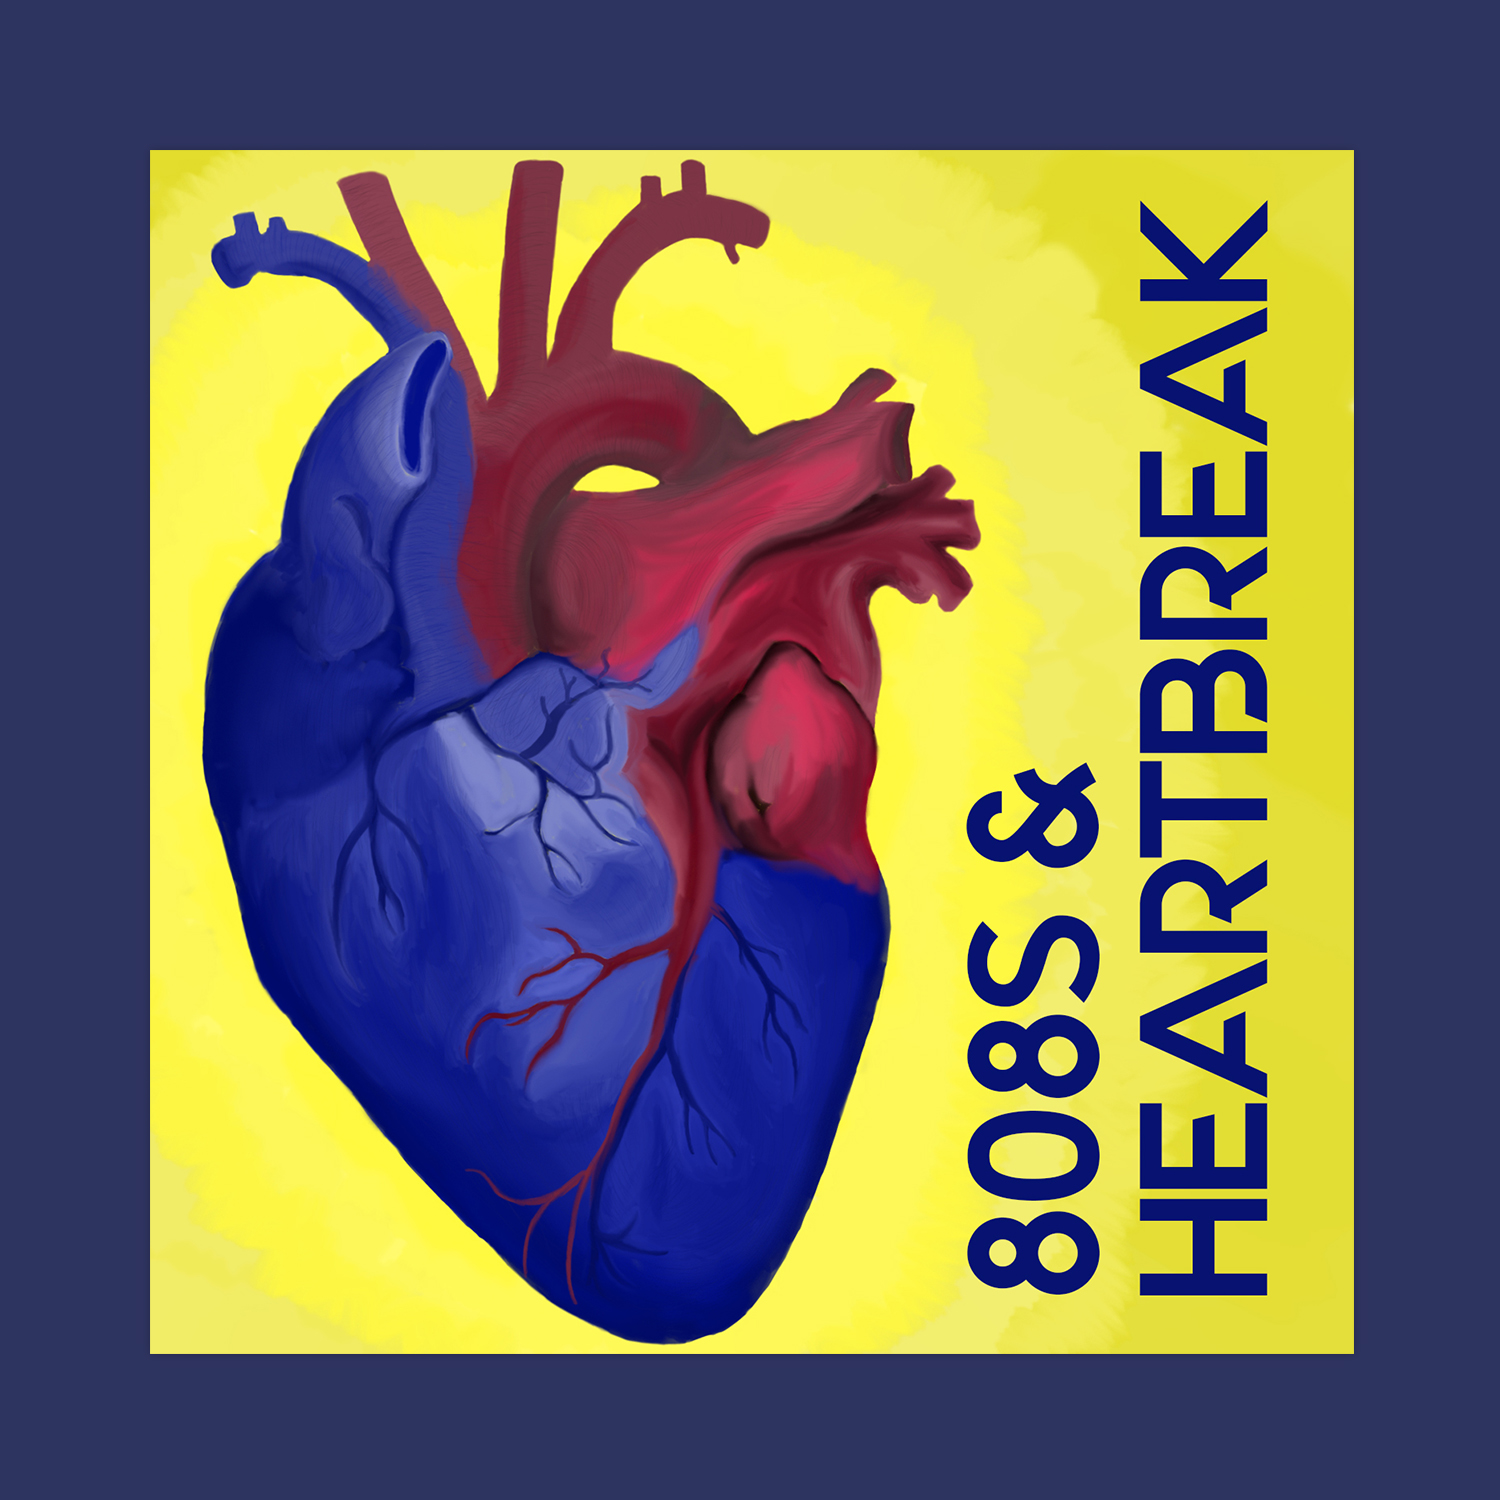 Album Cover Design - 808s and Heartbreak Portfolio Image -Designs by Martin Holloway